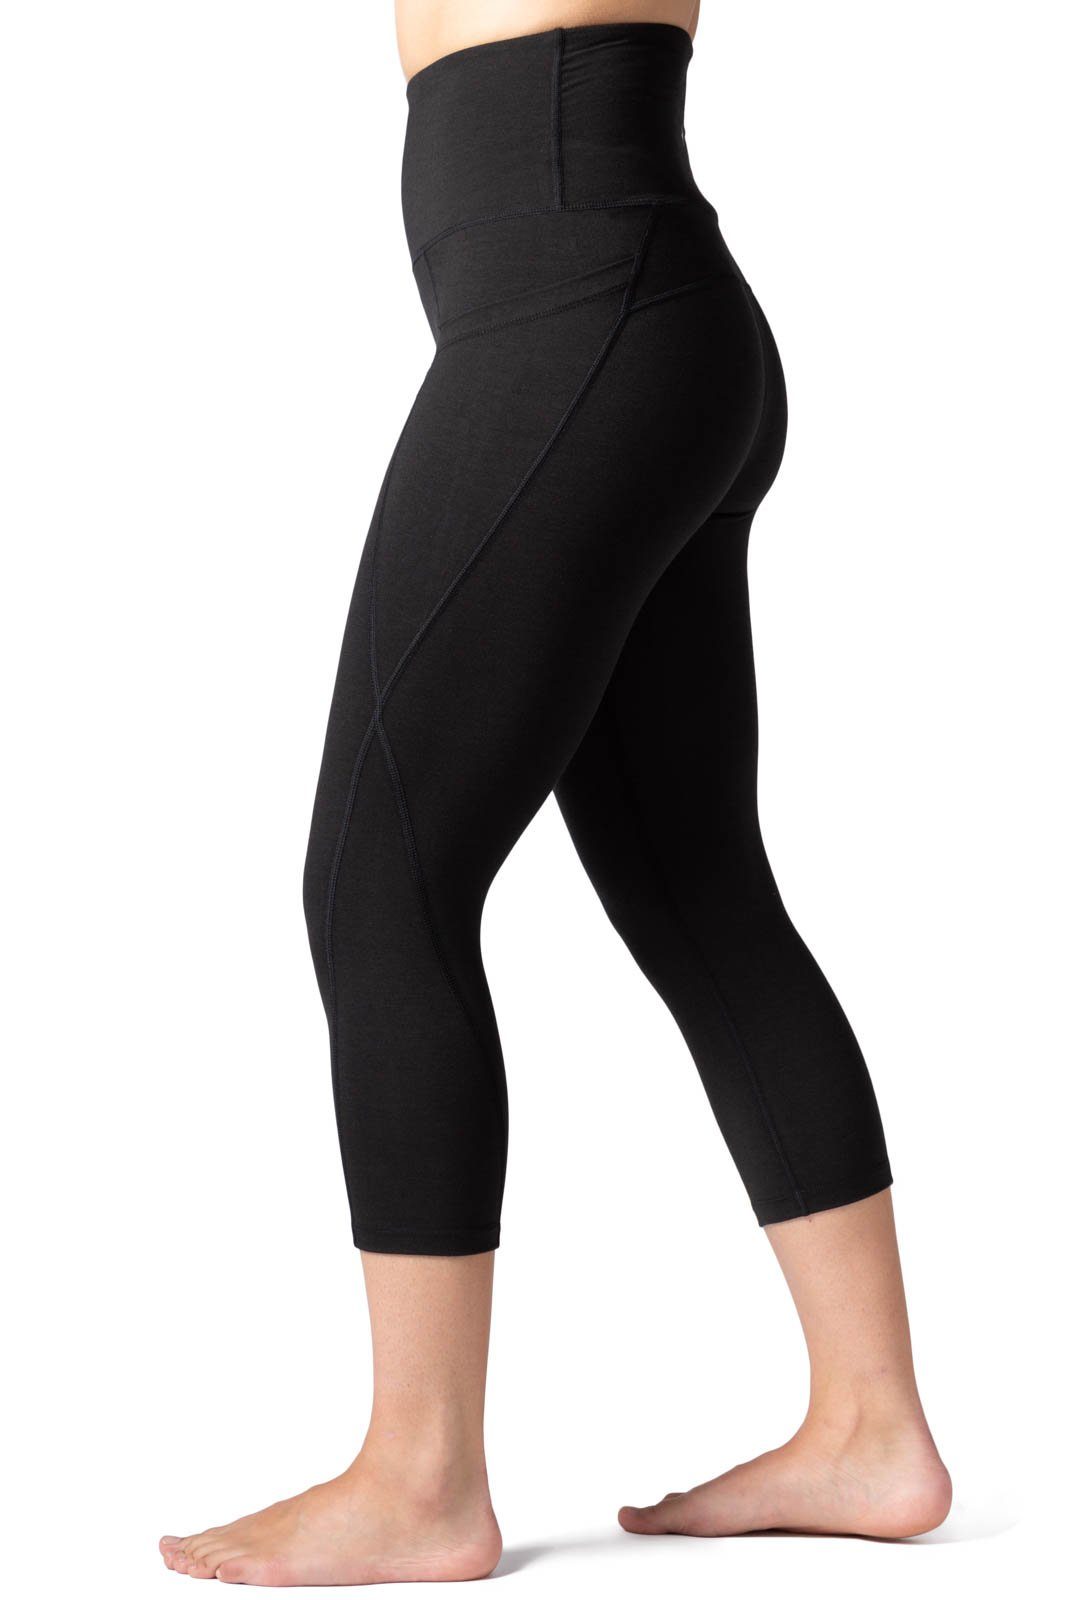 RIMLESS 7 Capri Pants for Women High Waisted Capri Leggings with Pockets  Workout Yoga Pants White